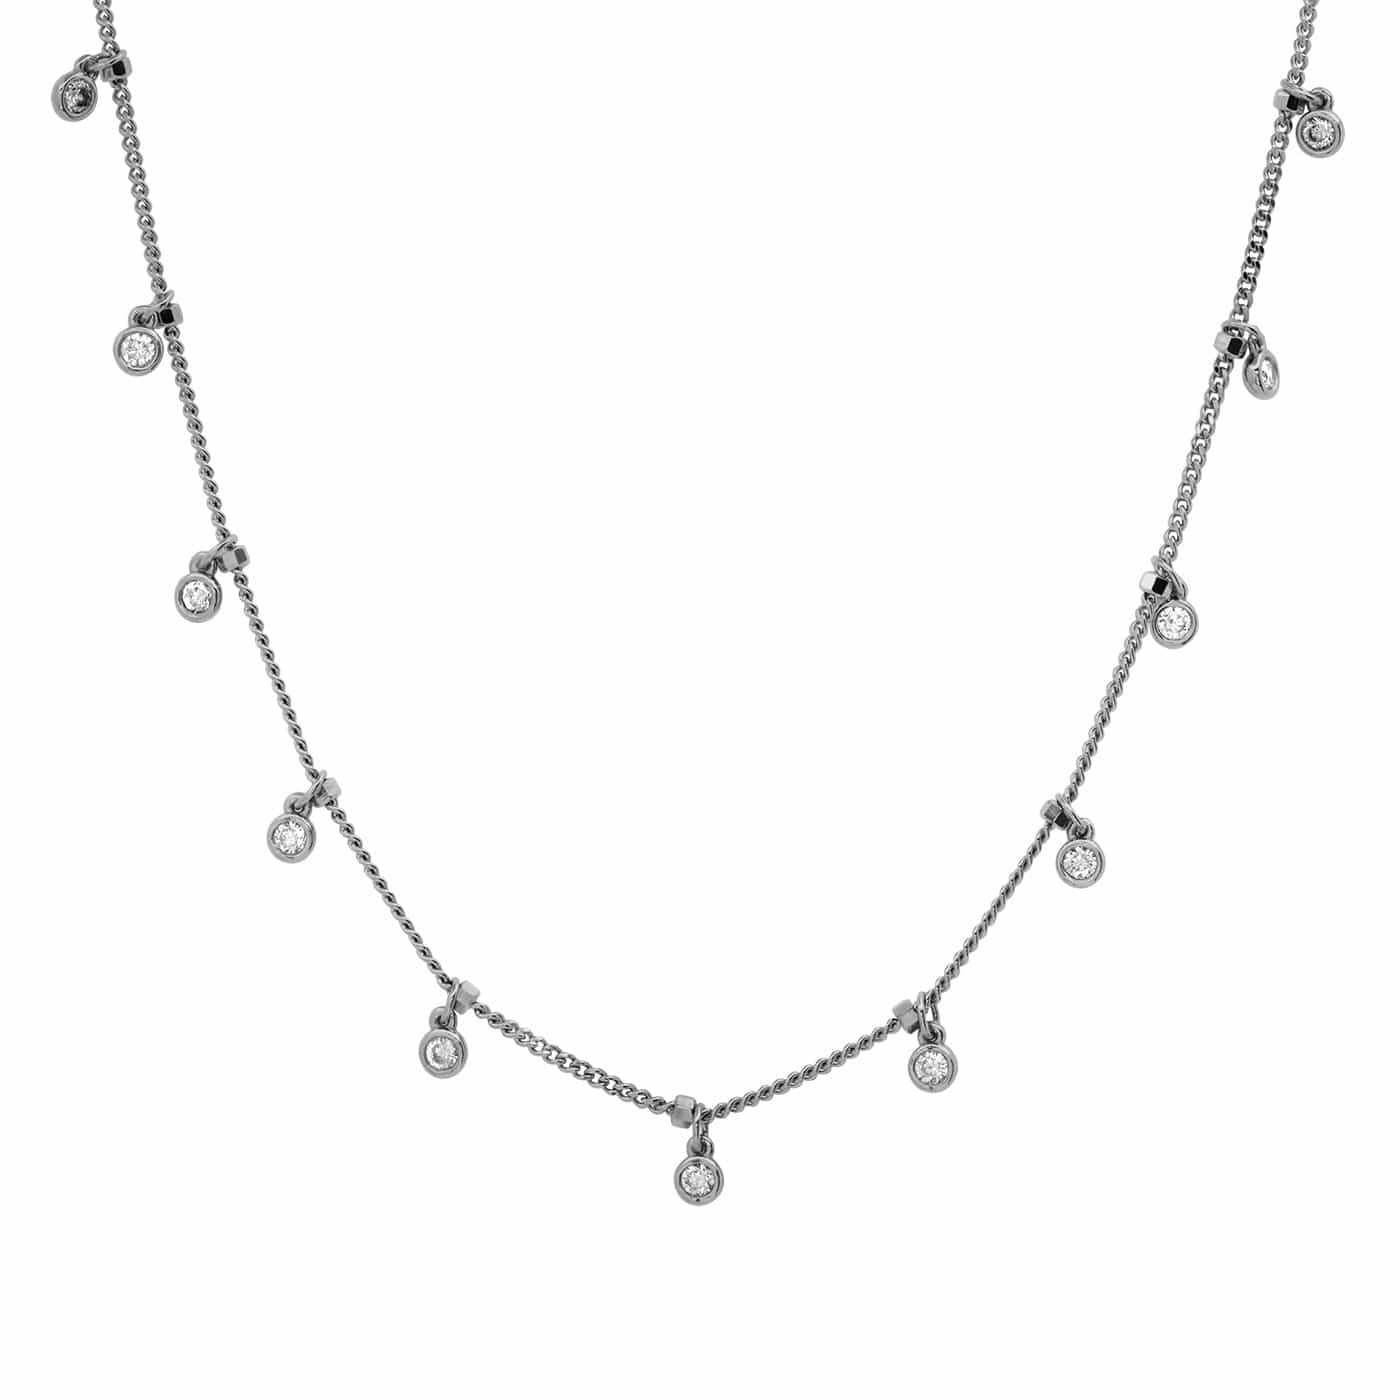 TAI JEWELRY Necklace Silver Ox Chain with Bezel Set CZ Stations